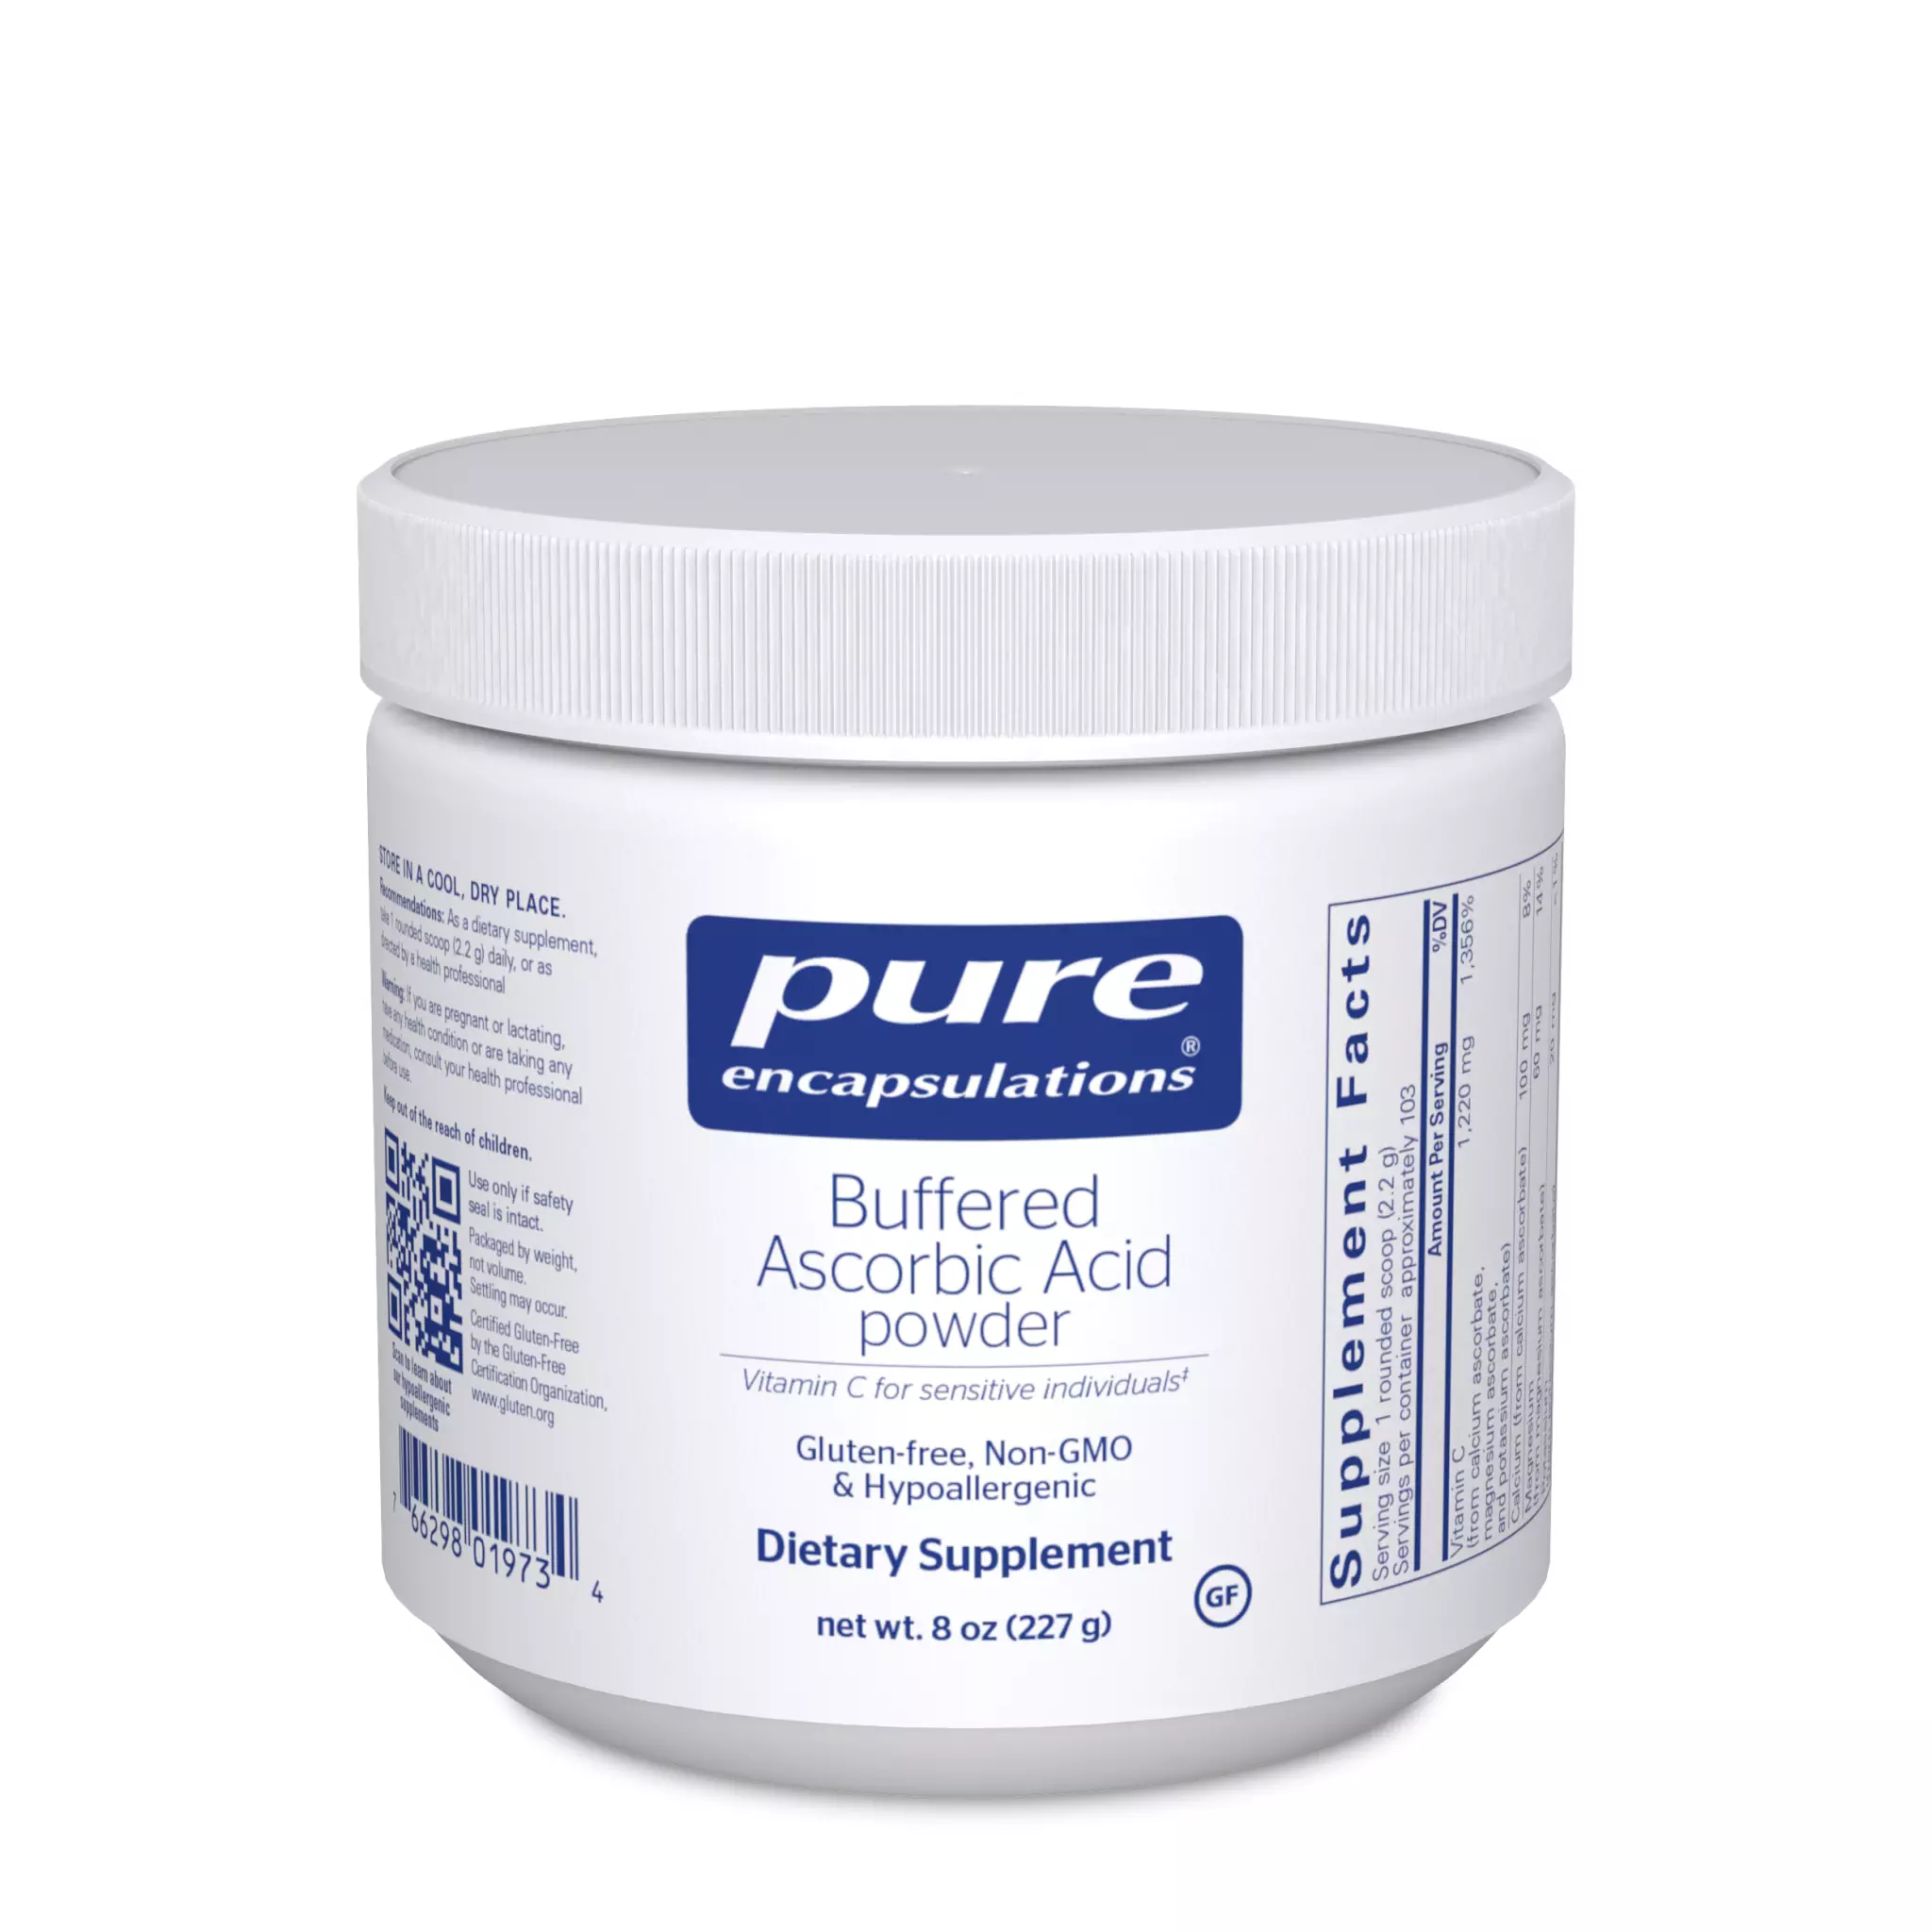 Pure Encapsulations - Ascorbic Acid Buffered Powder